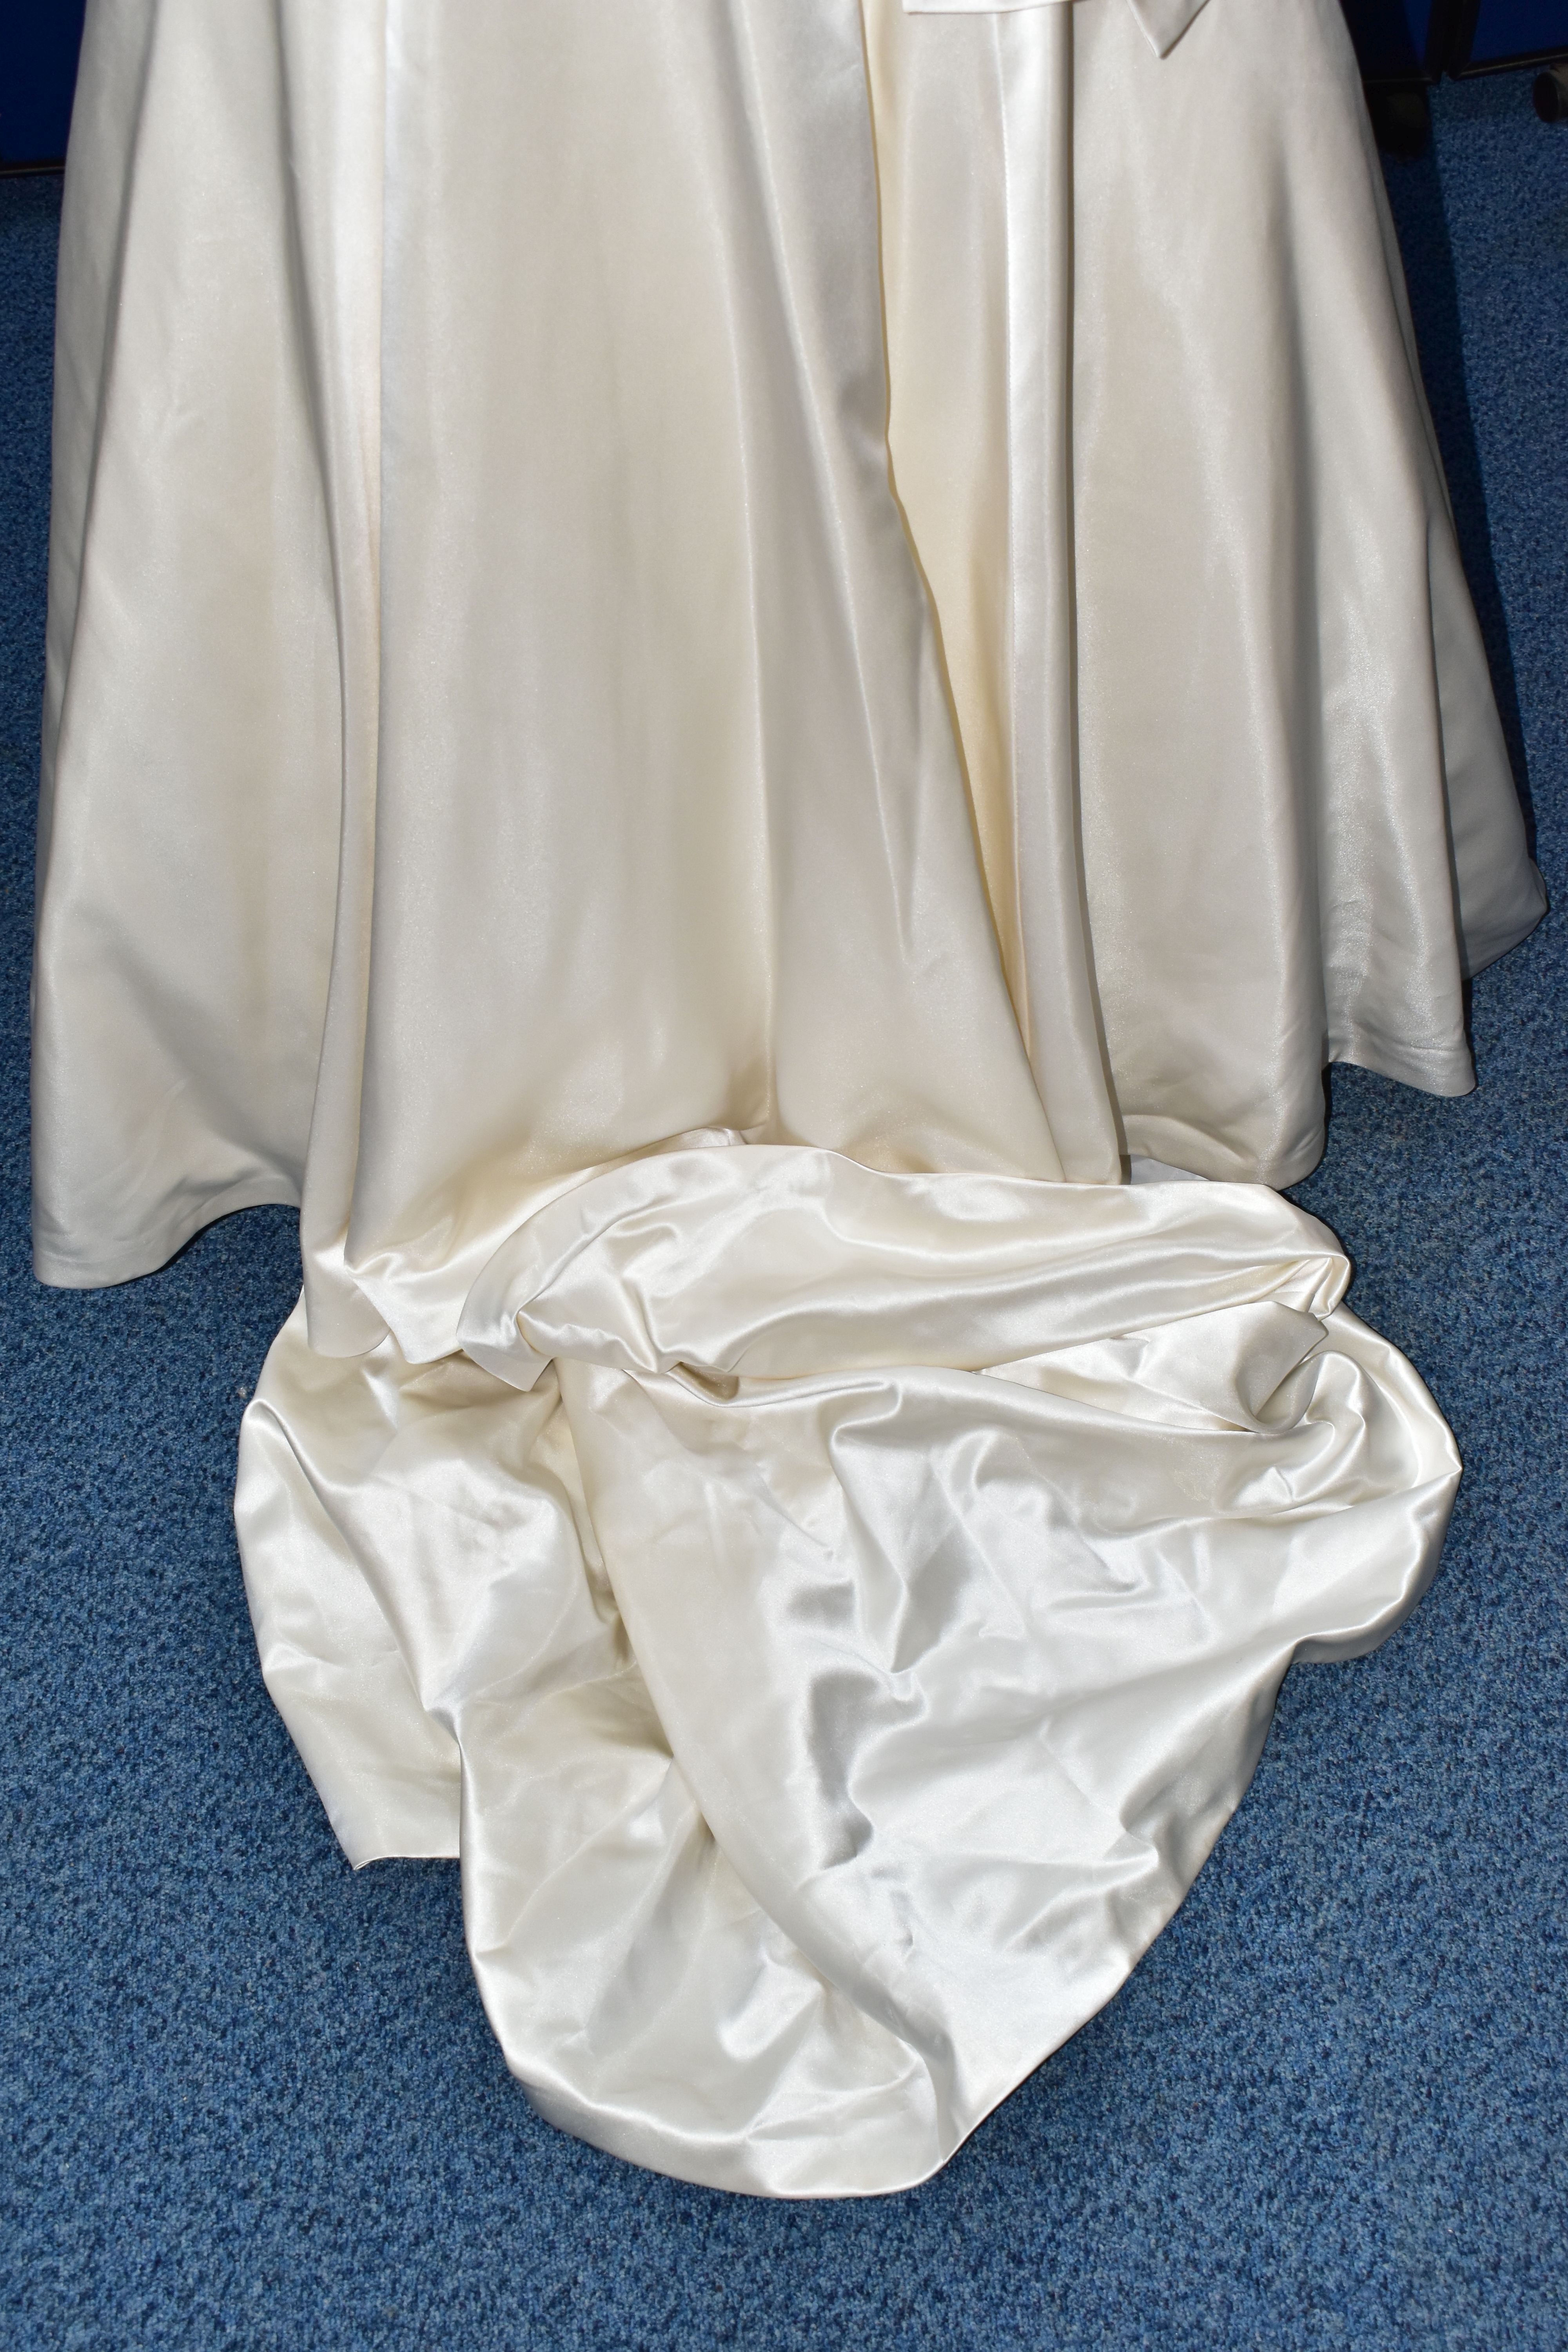 WEDDING DRESS, 'David Tutera' champagne, size 6, satin, strapless, beaded appliques (1) - Image 5 of 10